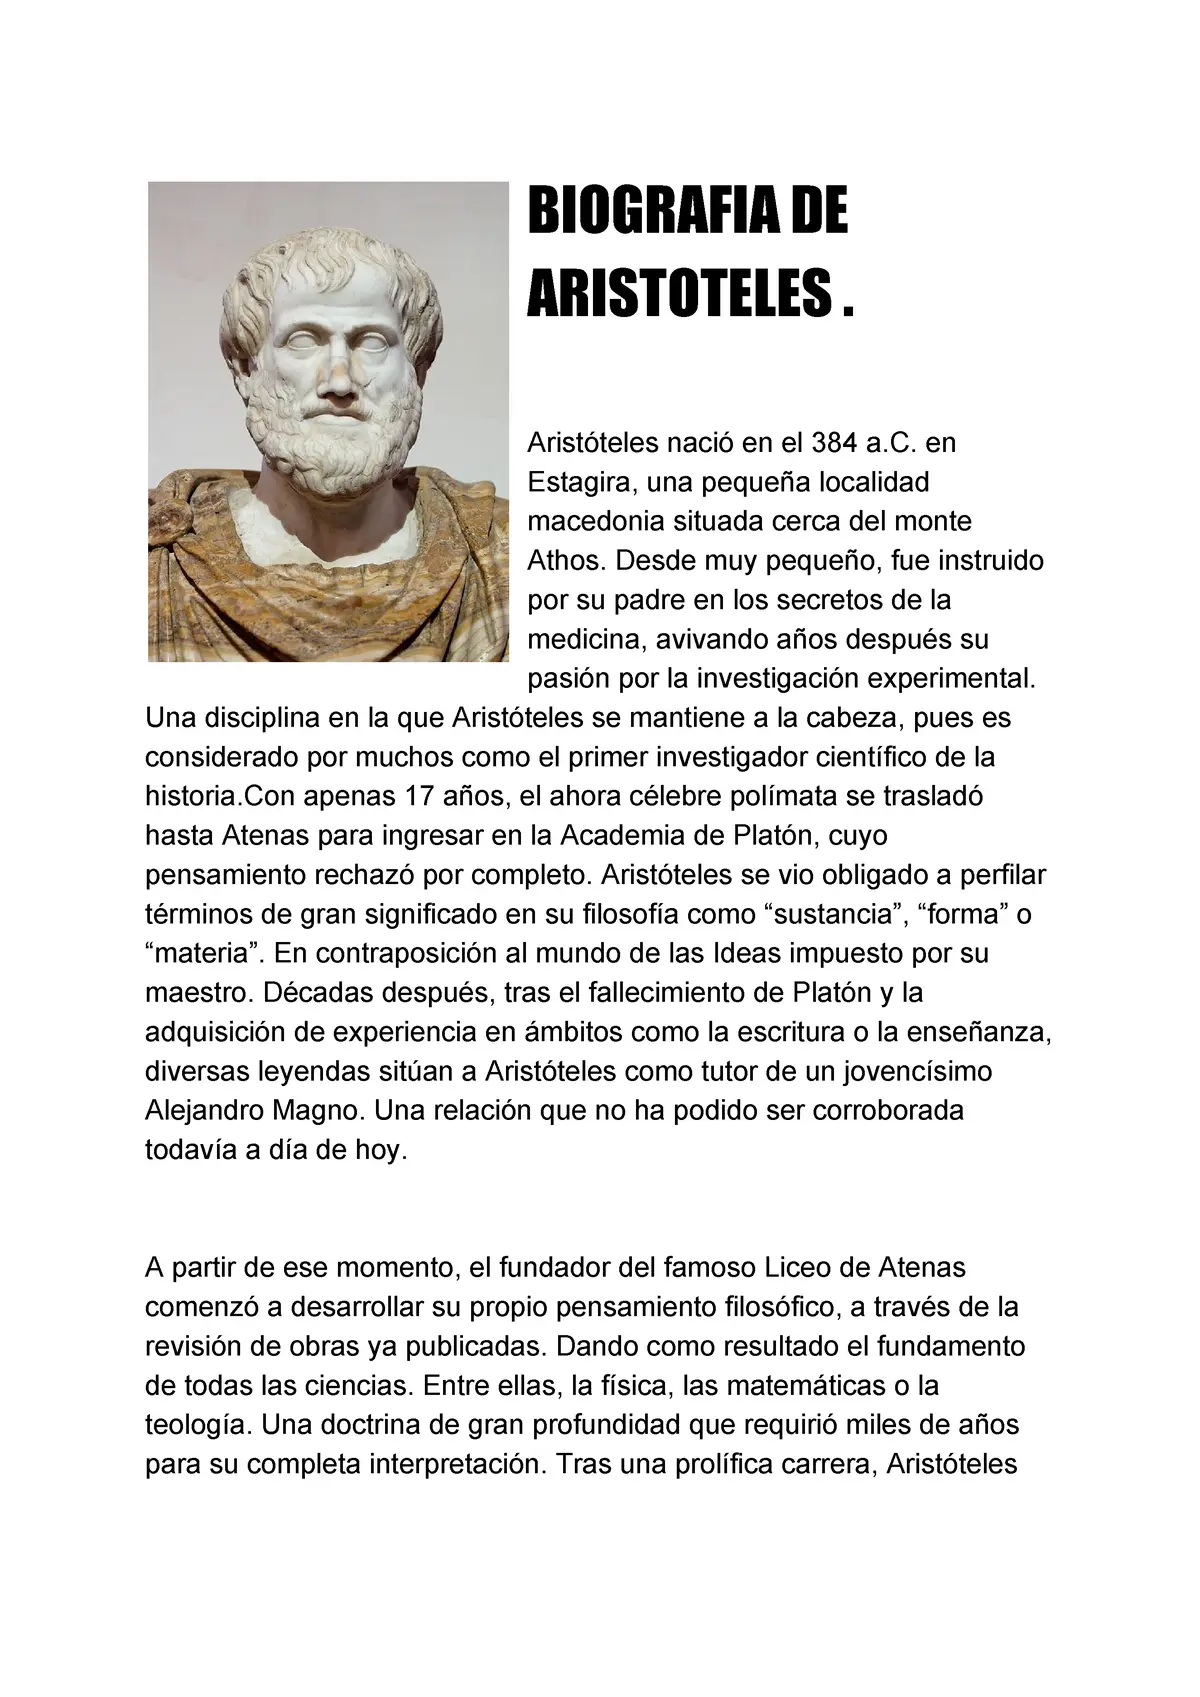 biografía resumida de aristóteles - Qué aportaciones hizo Aristóteles